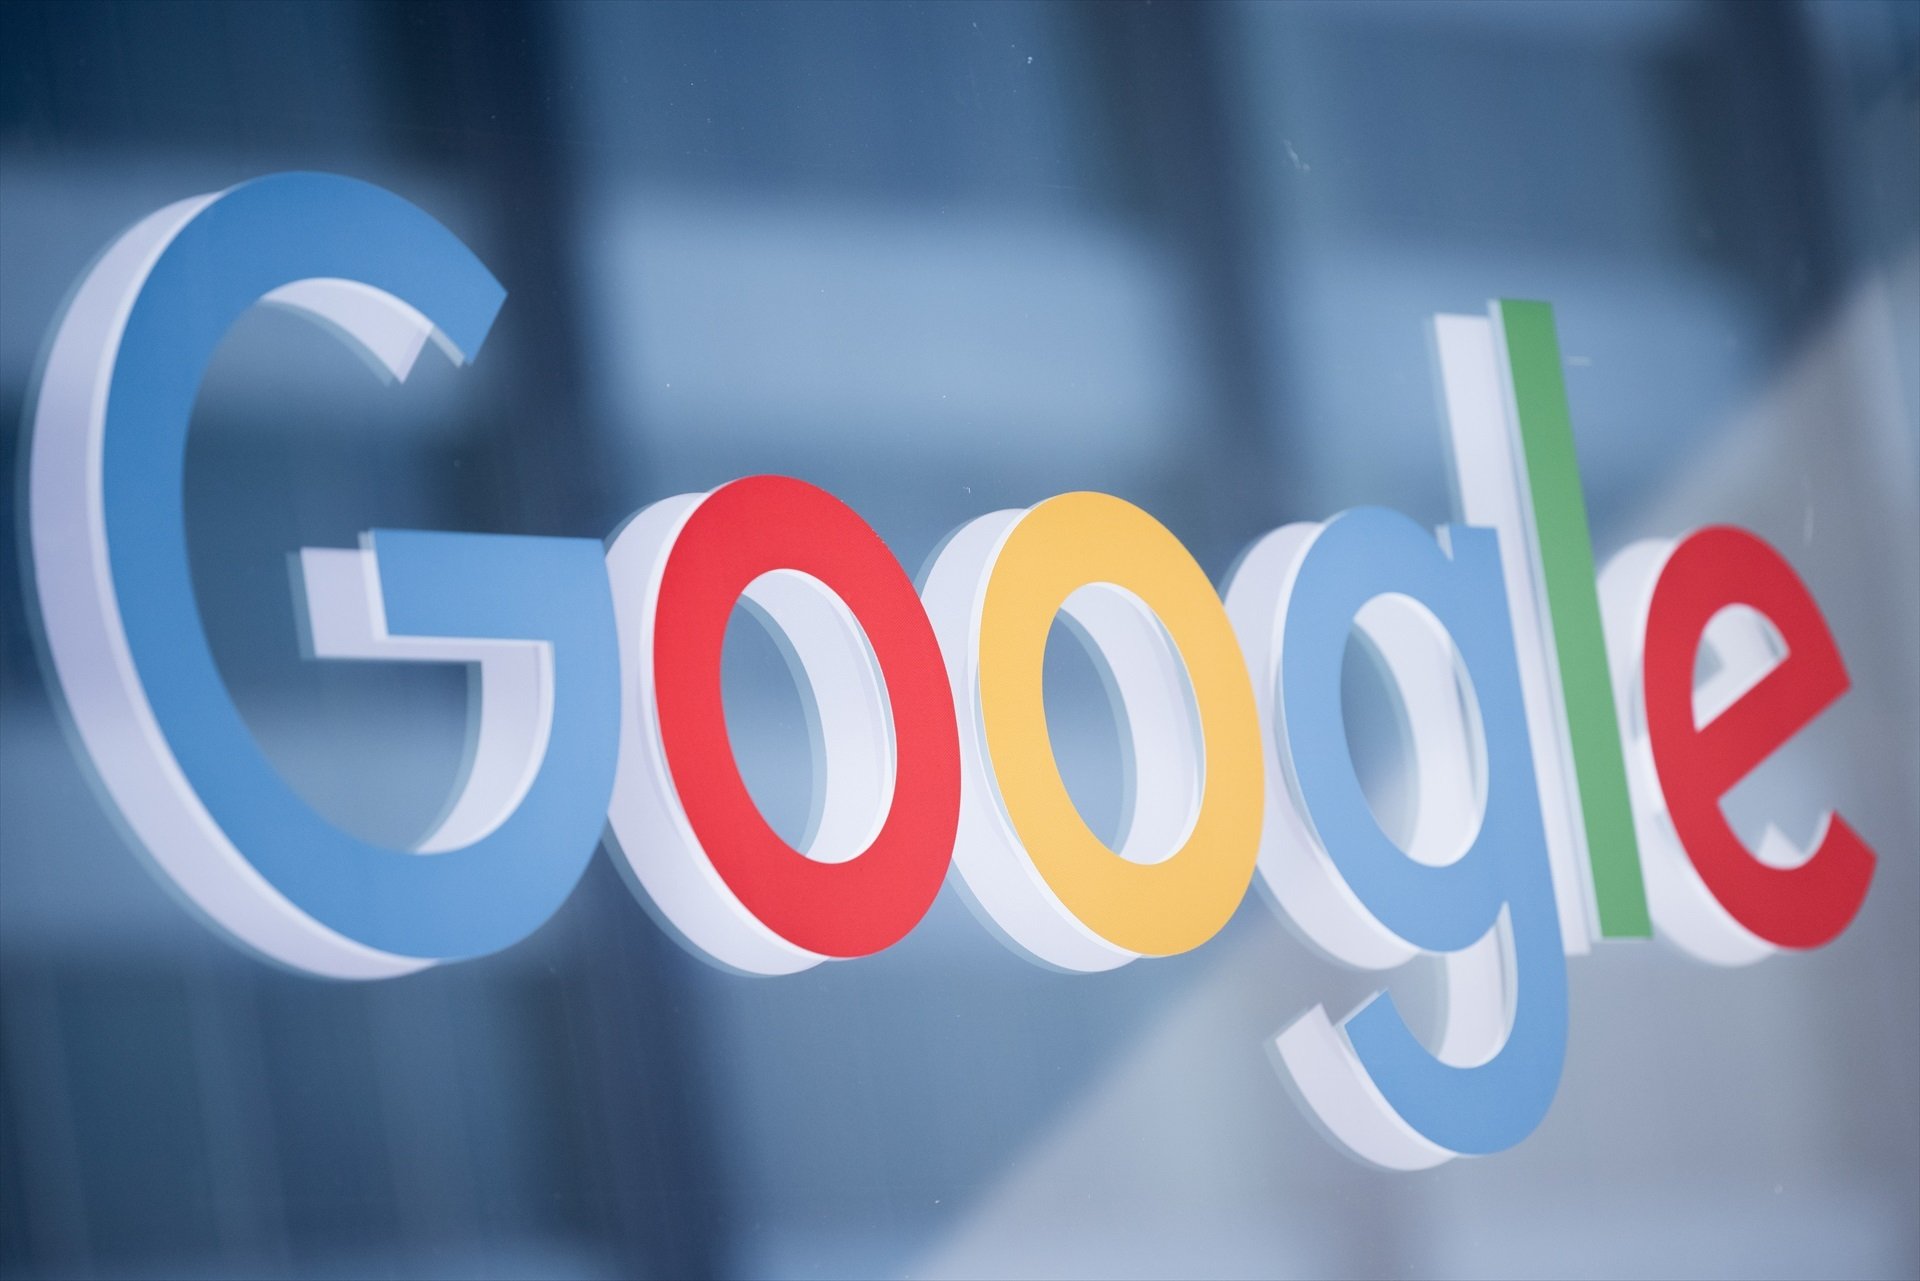 Google, investigada por la CNMC en España por posibles prácticas anticompetitivas con medios de comunicación